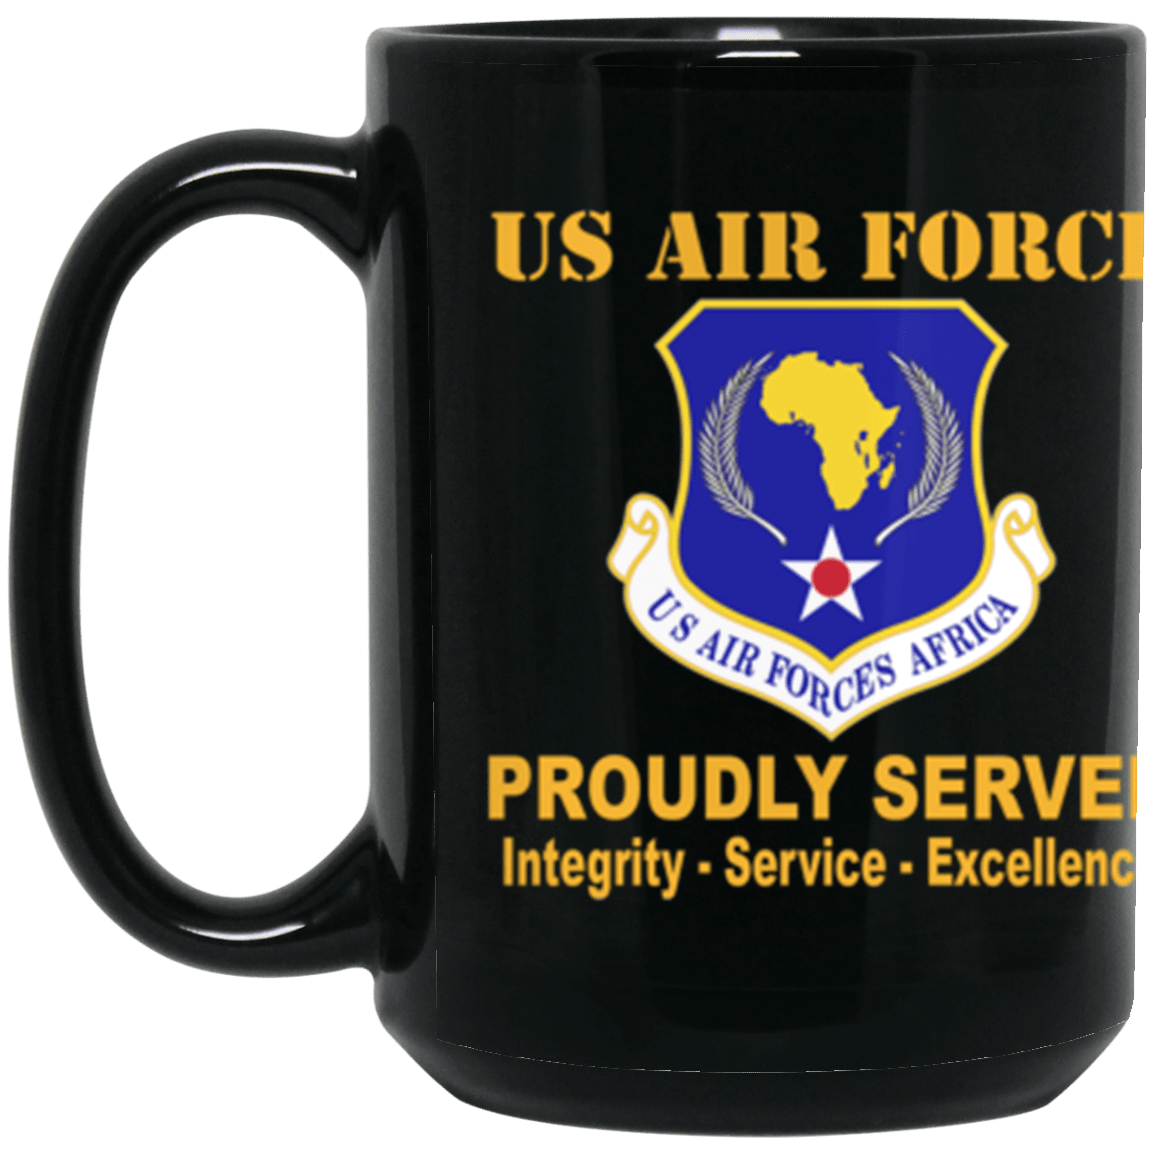 US Air Force Tactical Air Command Proudly Served Core Values 15 oz. Black Mug-Mug-USAF-Veterans Nation